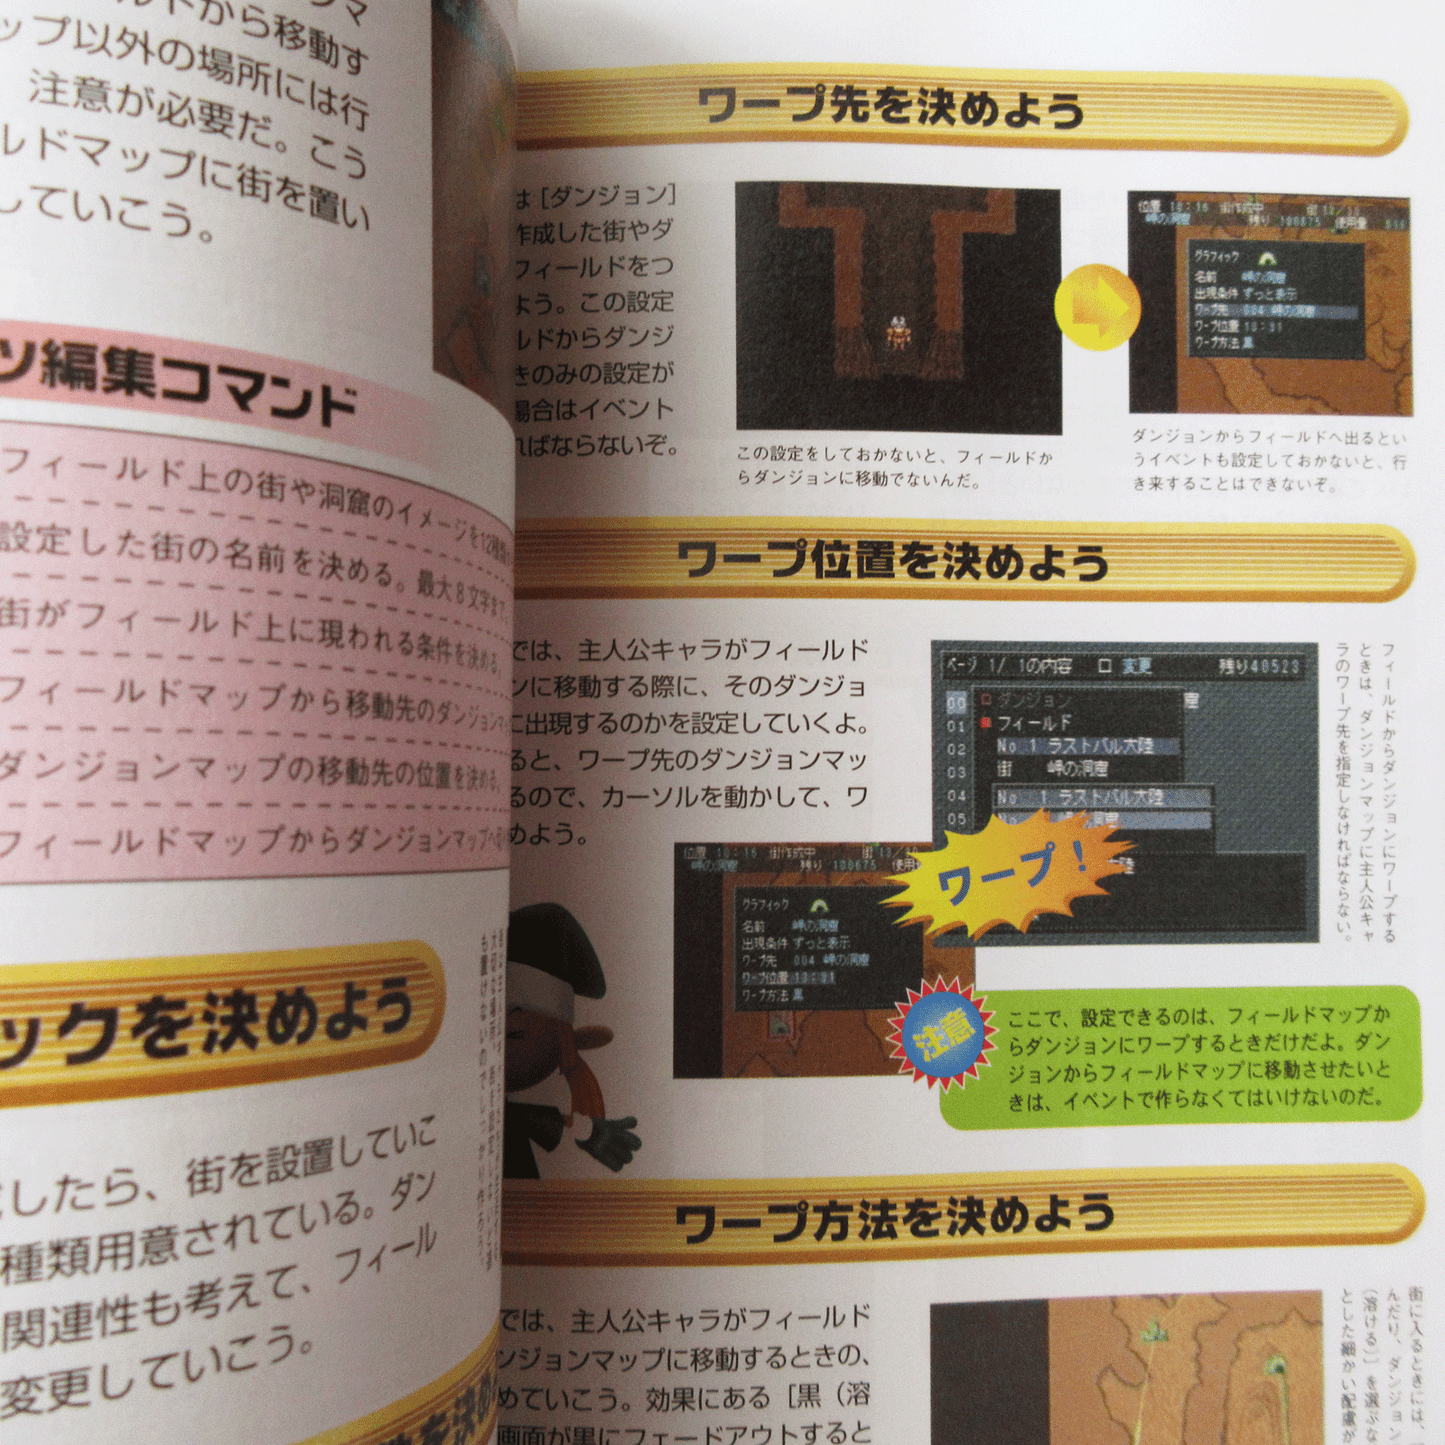 RPG Maker 3 (RPG Tsukuru) Official Guide Book